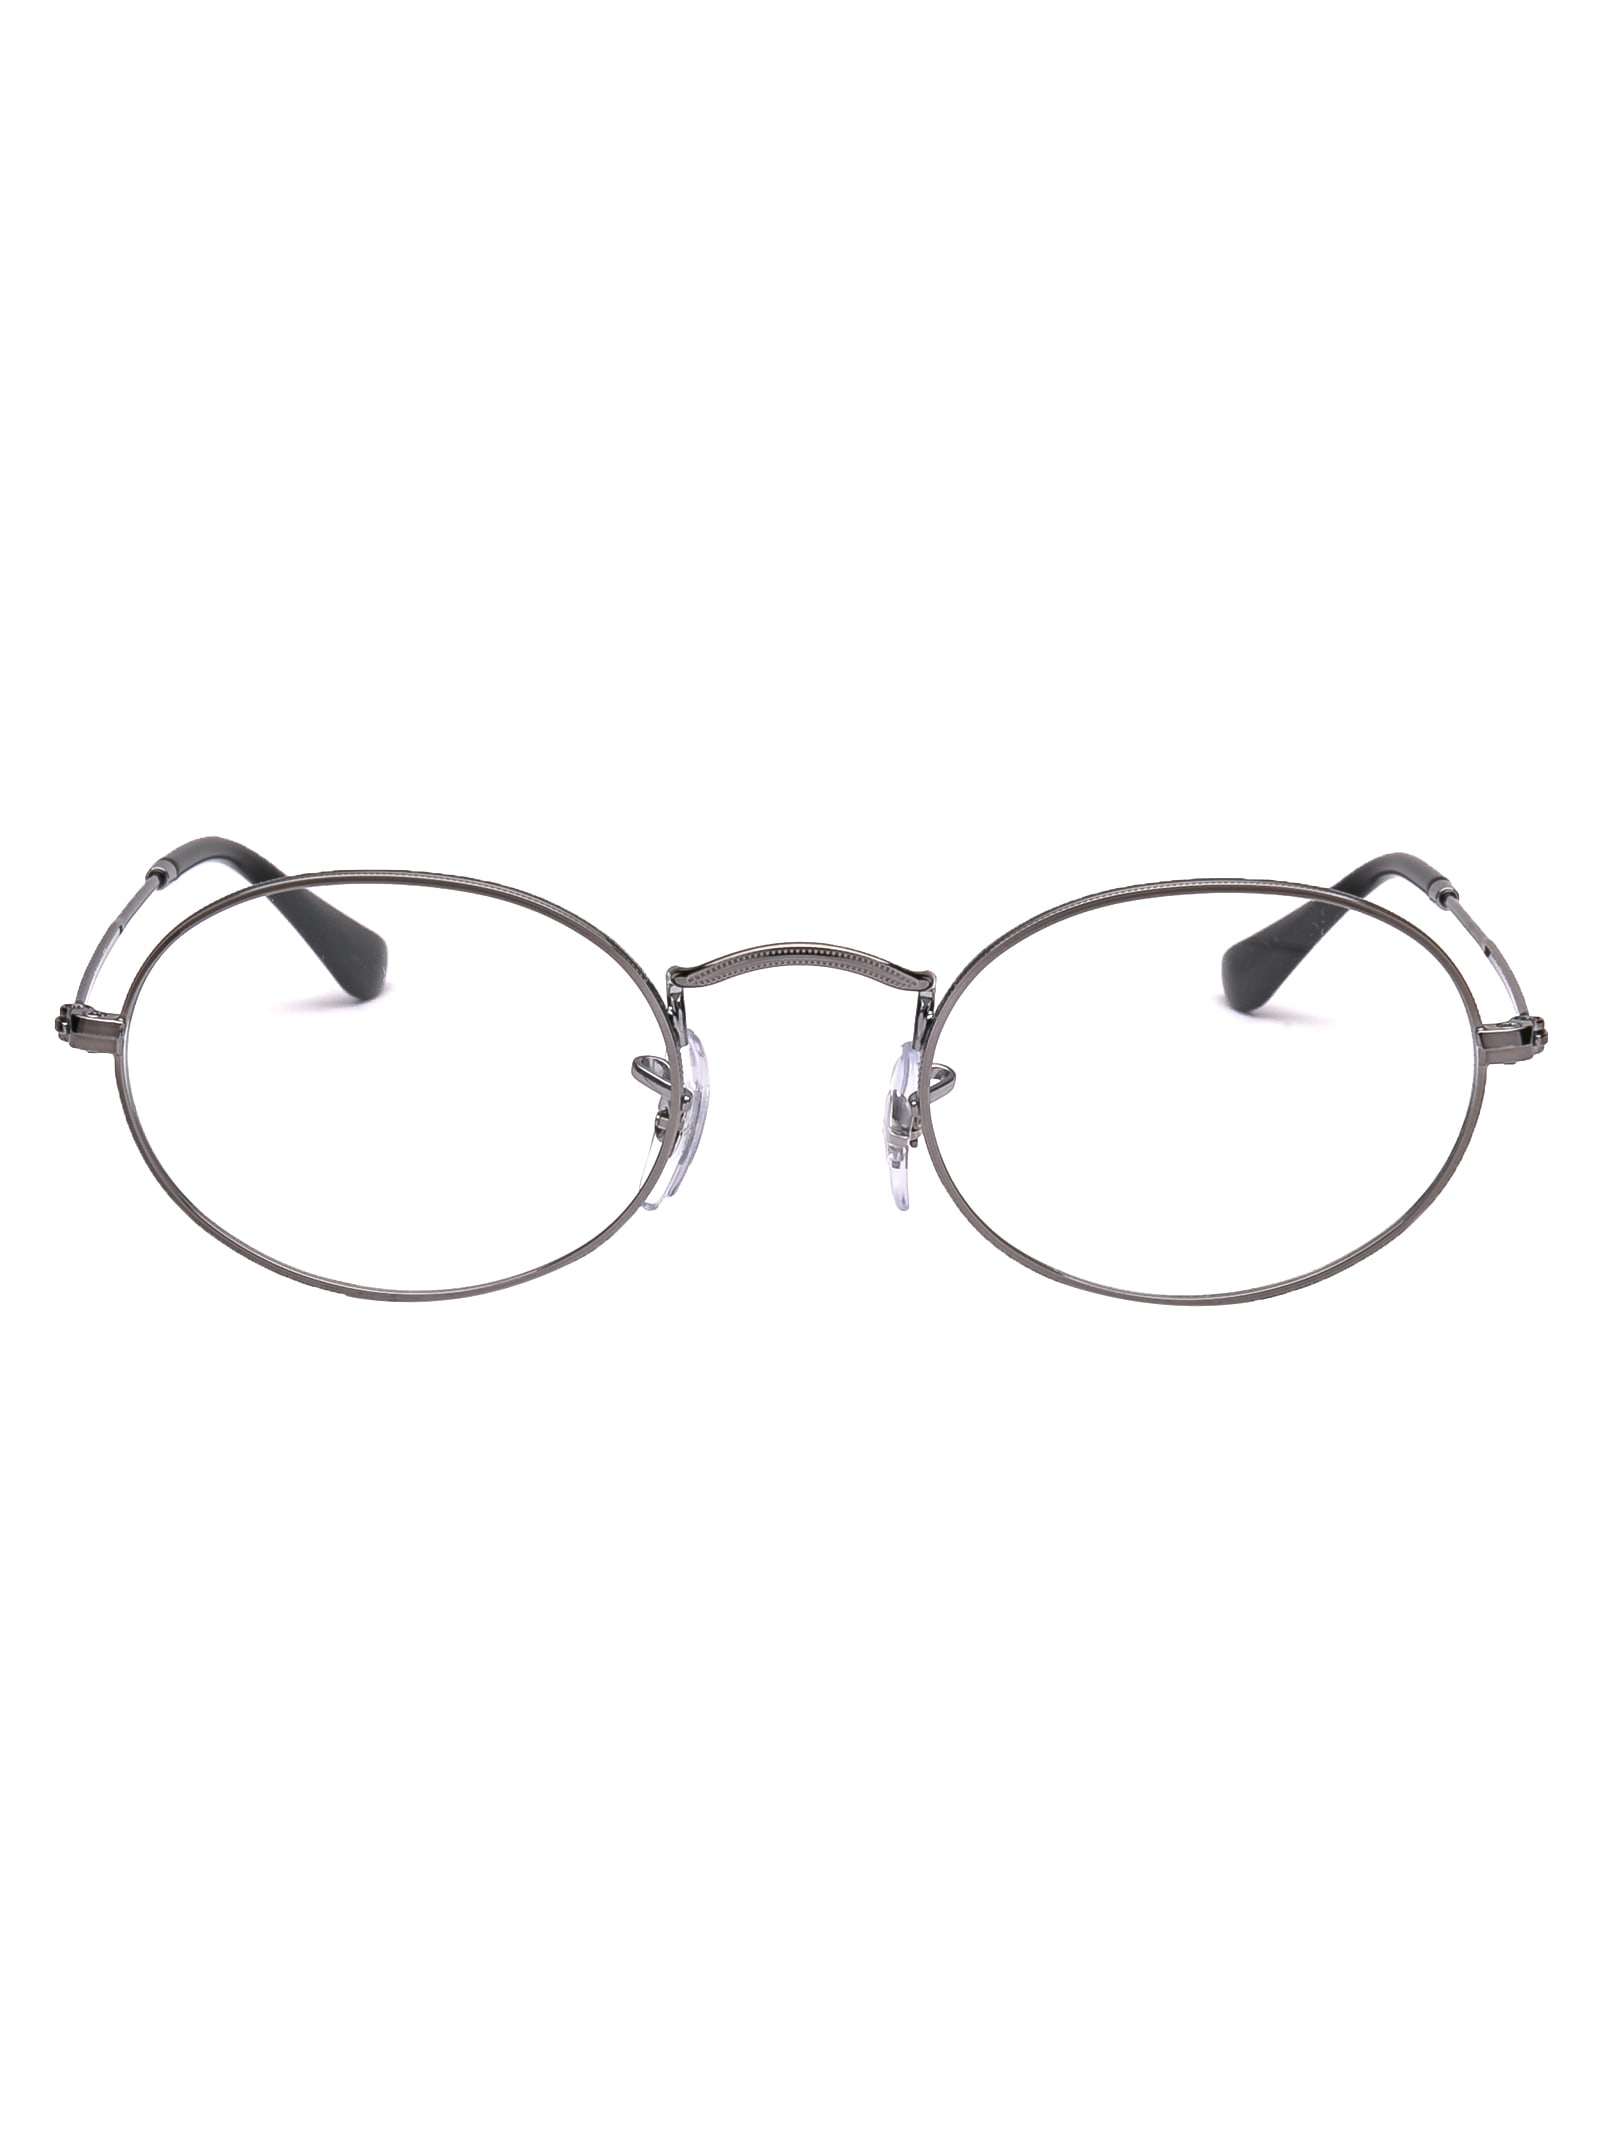 Ray Ban Oval Glasses In 2502 Gunmetal